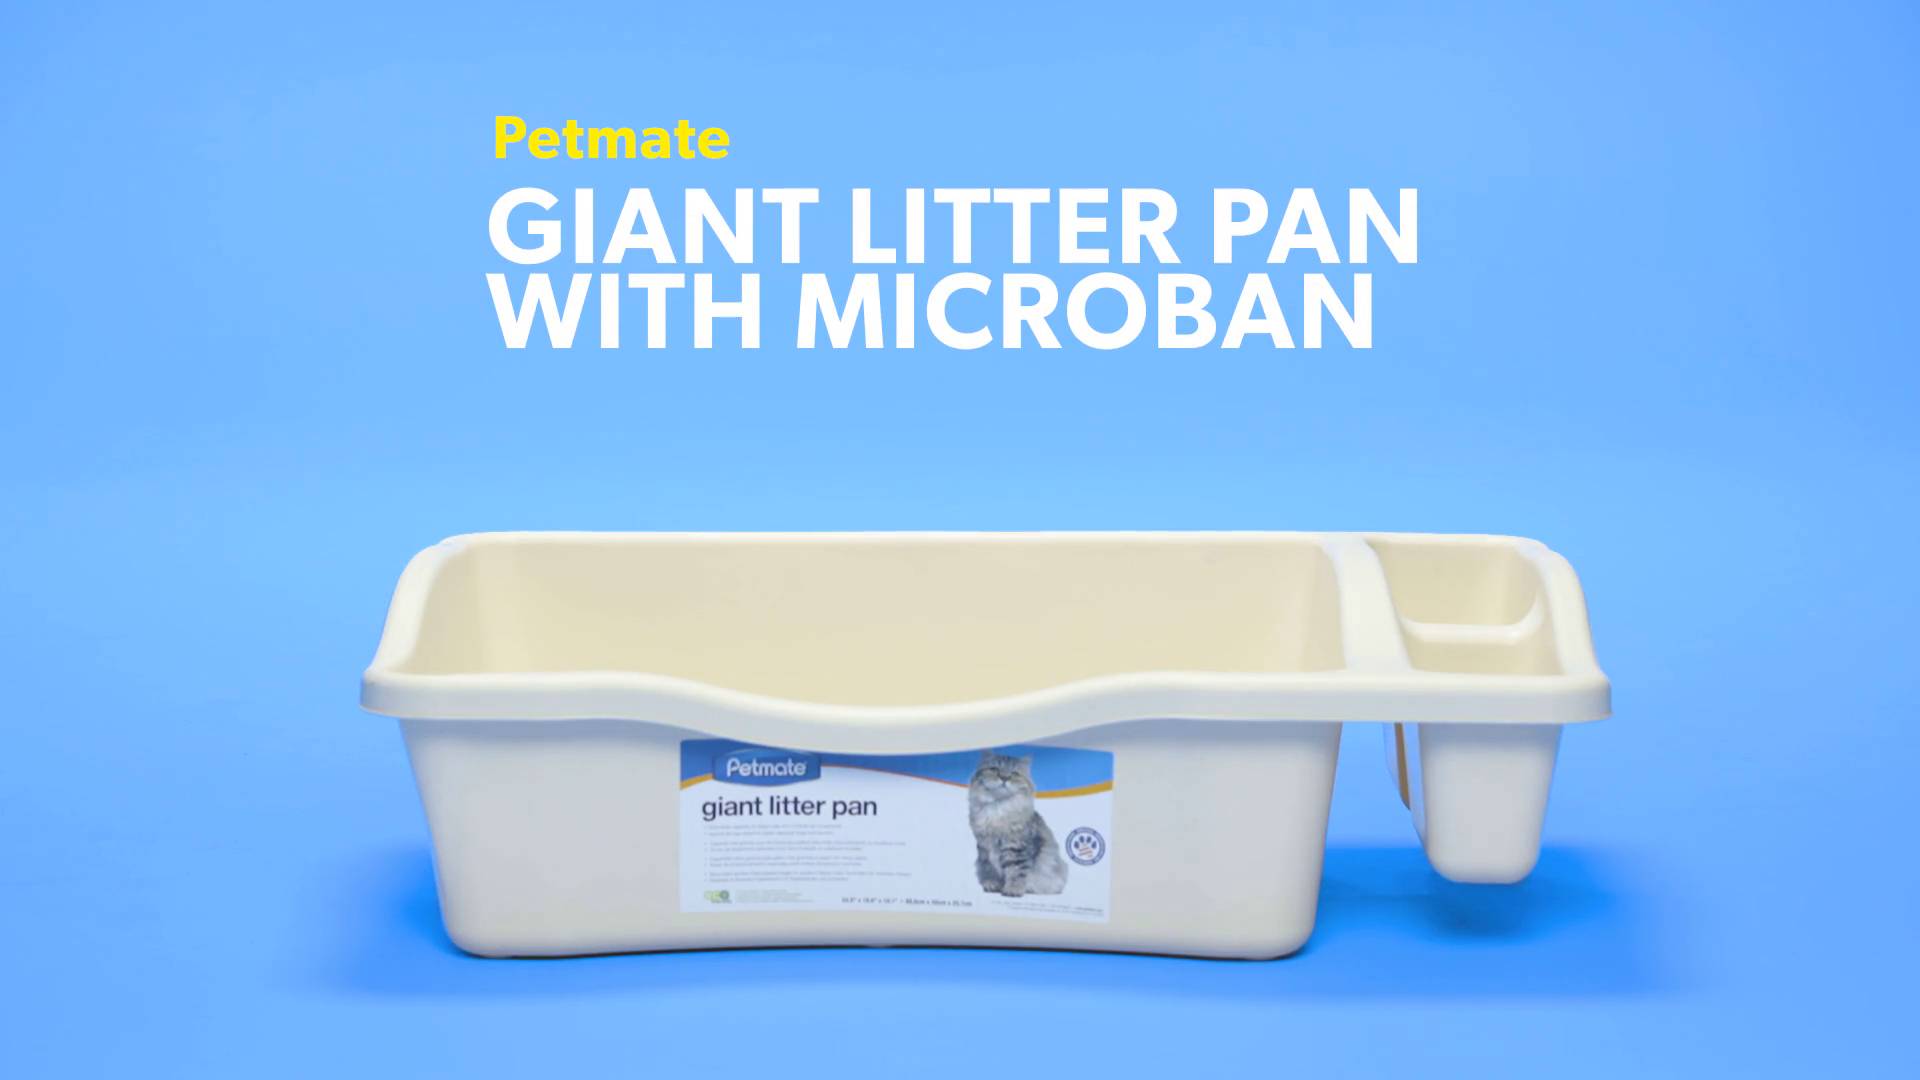 petmate giant litter pan with microban